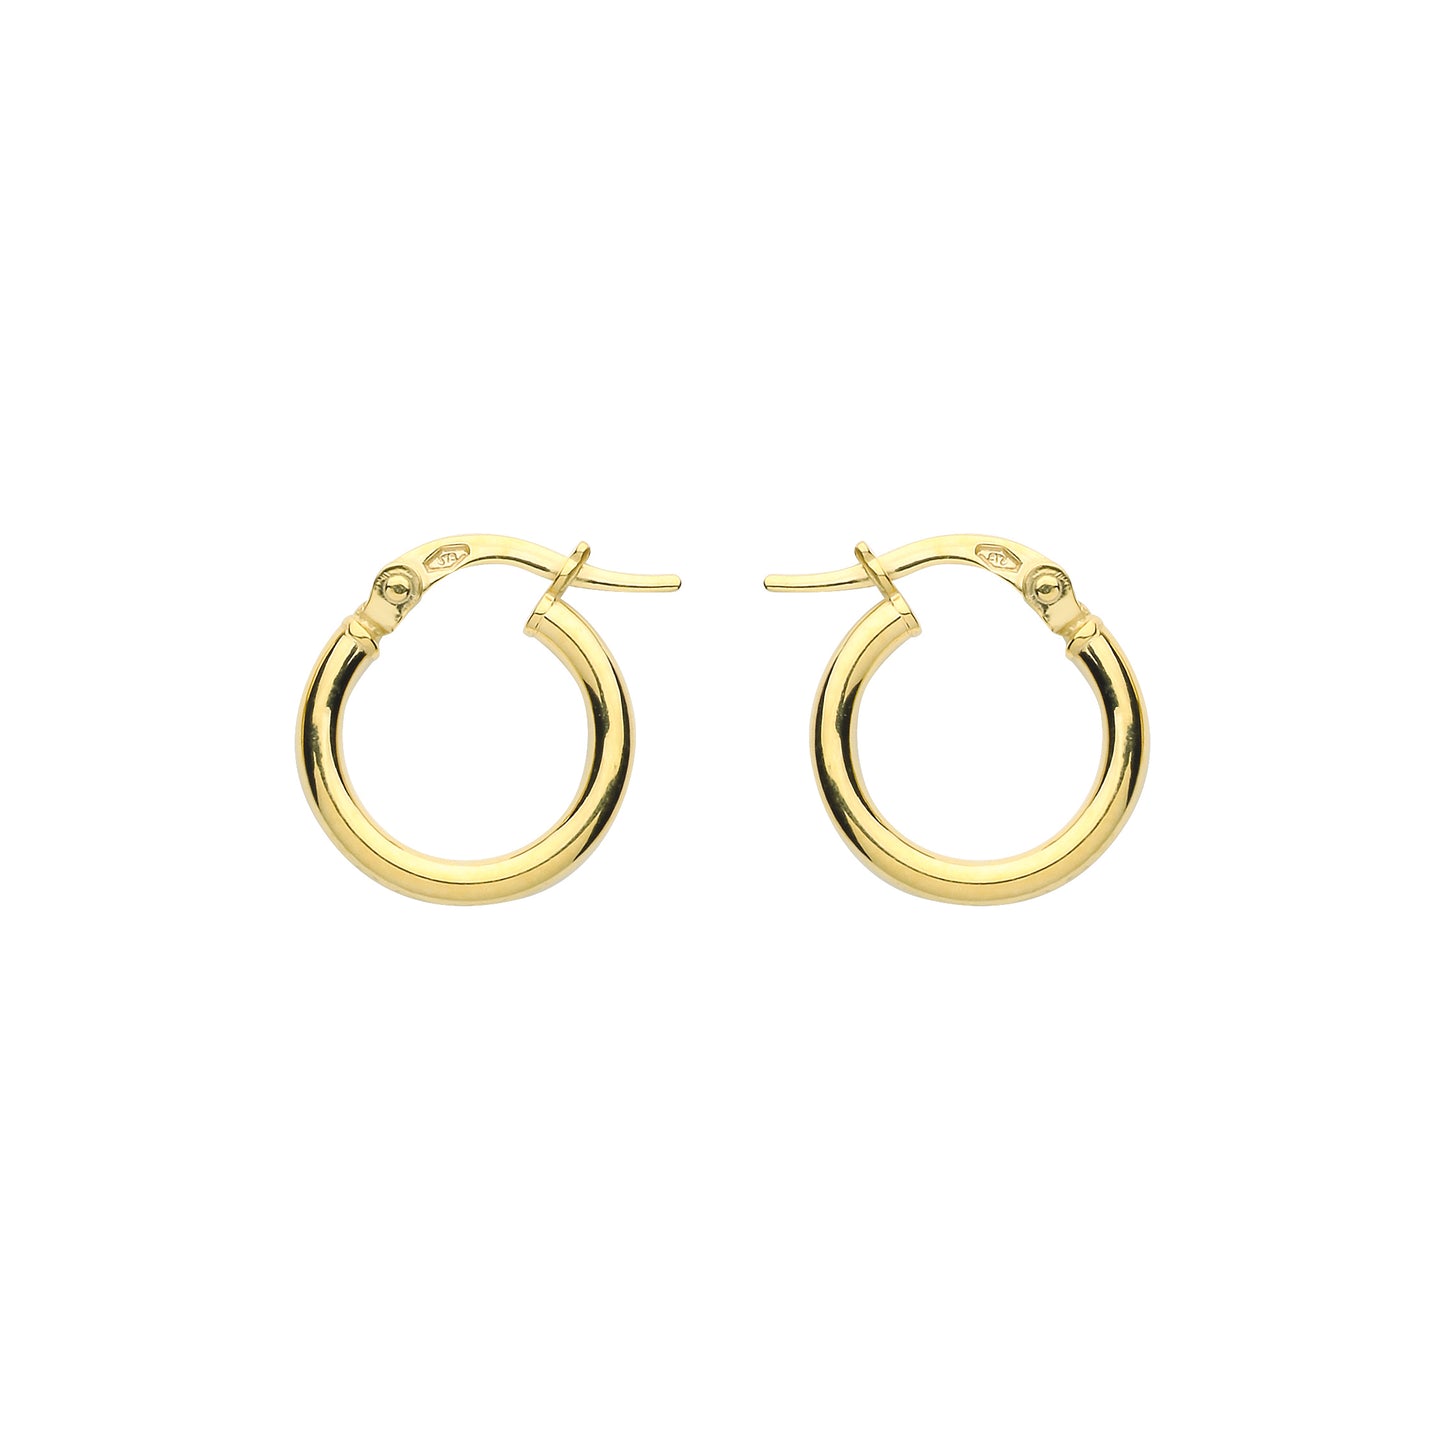 9ct Gold  Plain Polished Round Tube Hoop Earrings 15mm 2mm - G9E8078